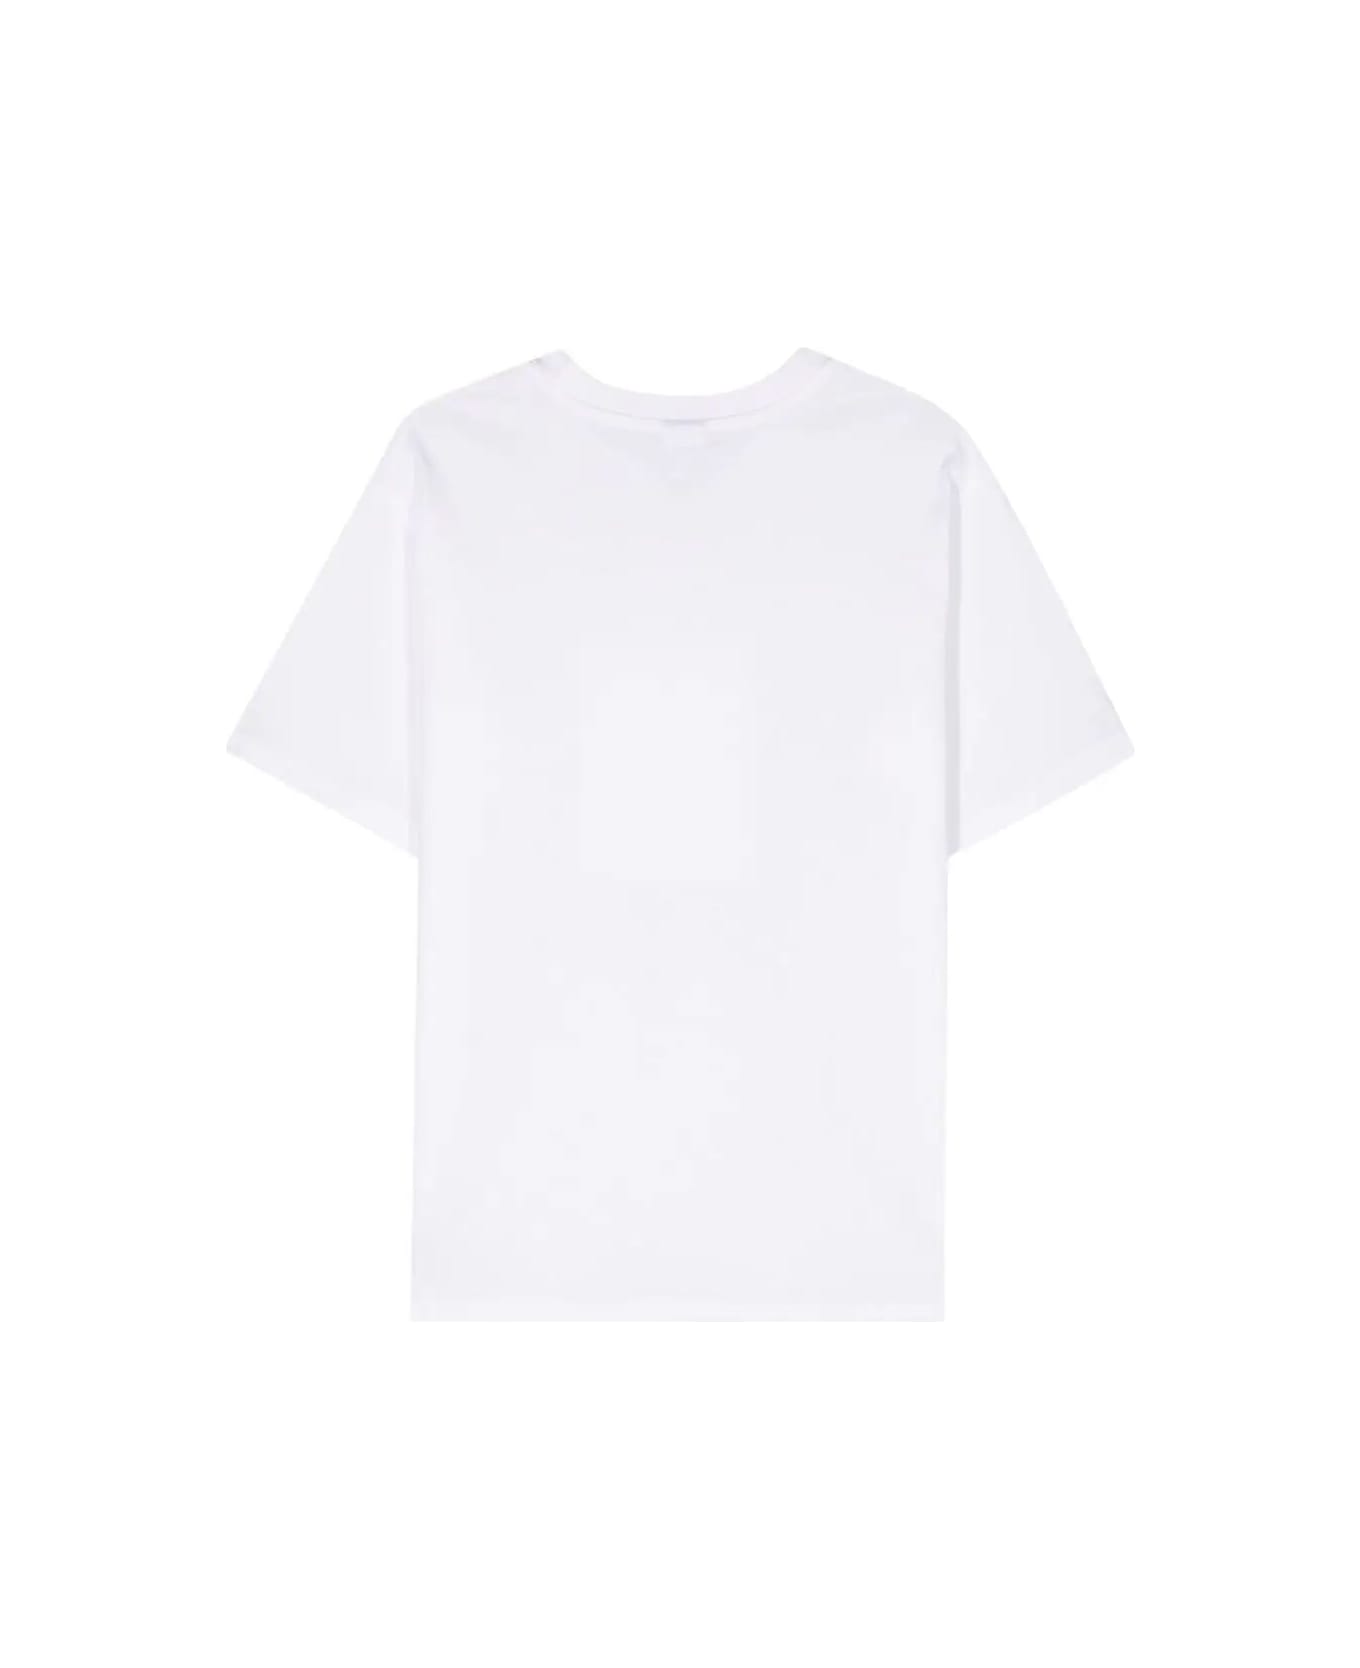 New Balance Athletics Models Never Age Relaxed T-shirt - White